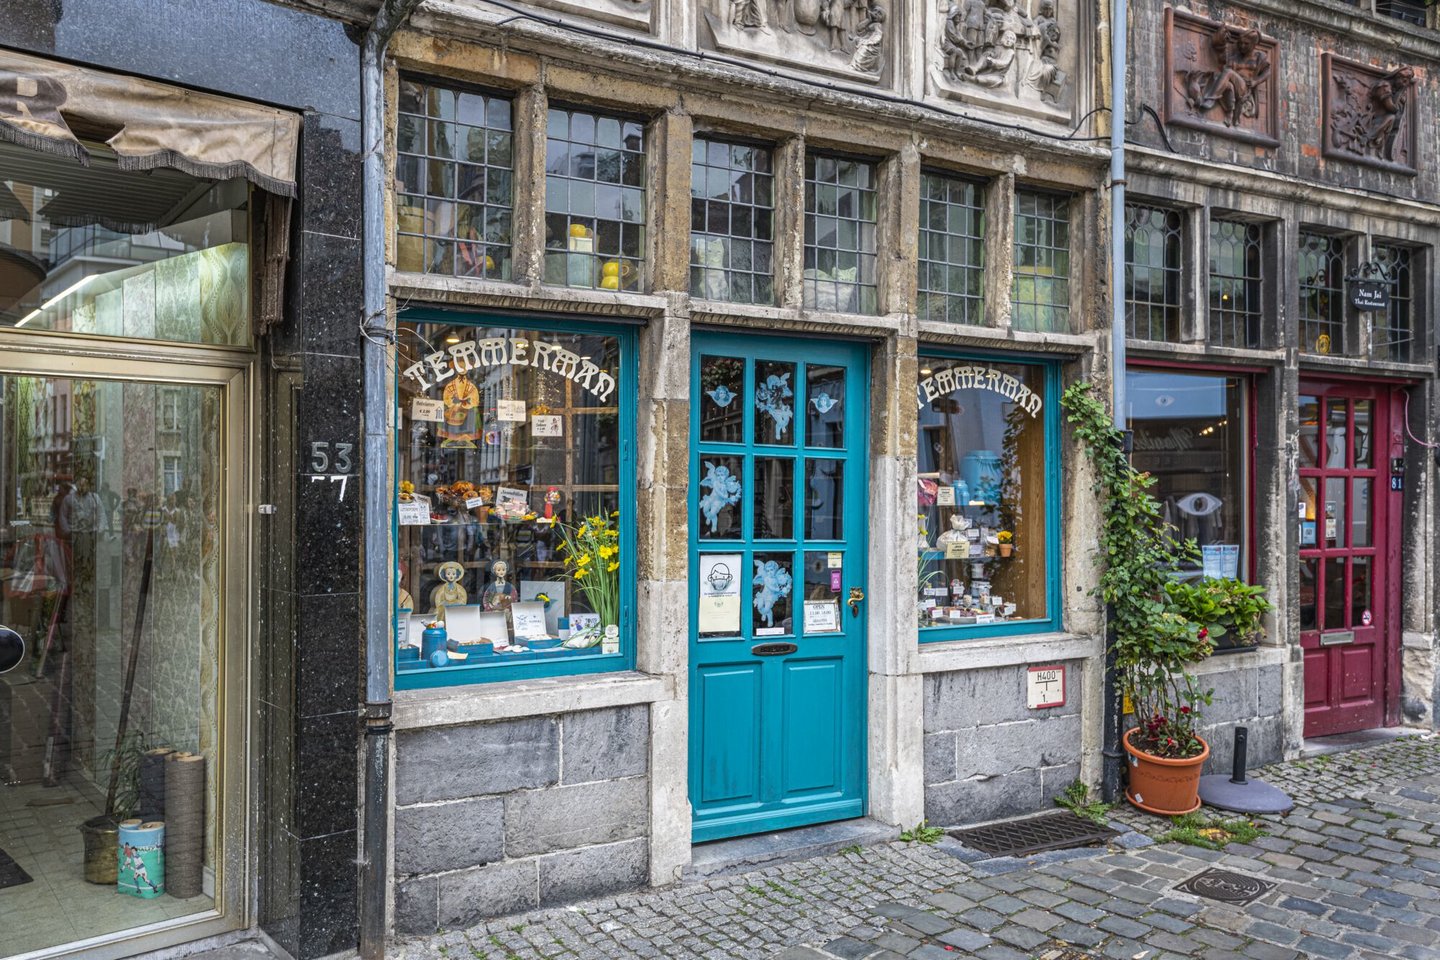 Etalage van Confiserie Temmerman, een snoepwinkel in Gent